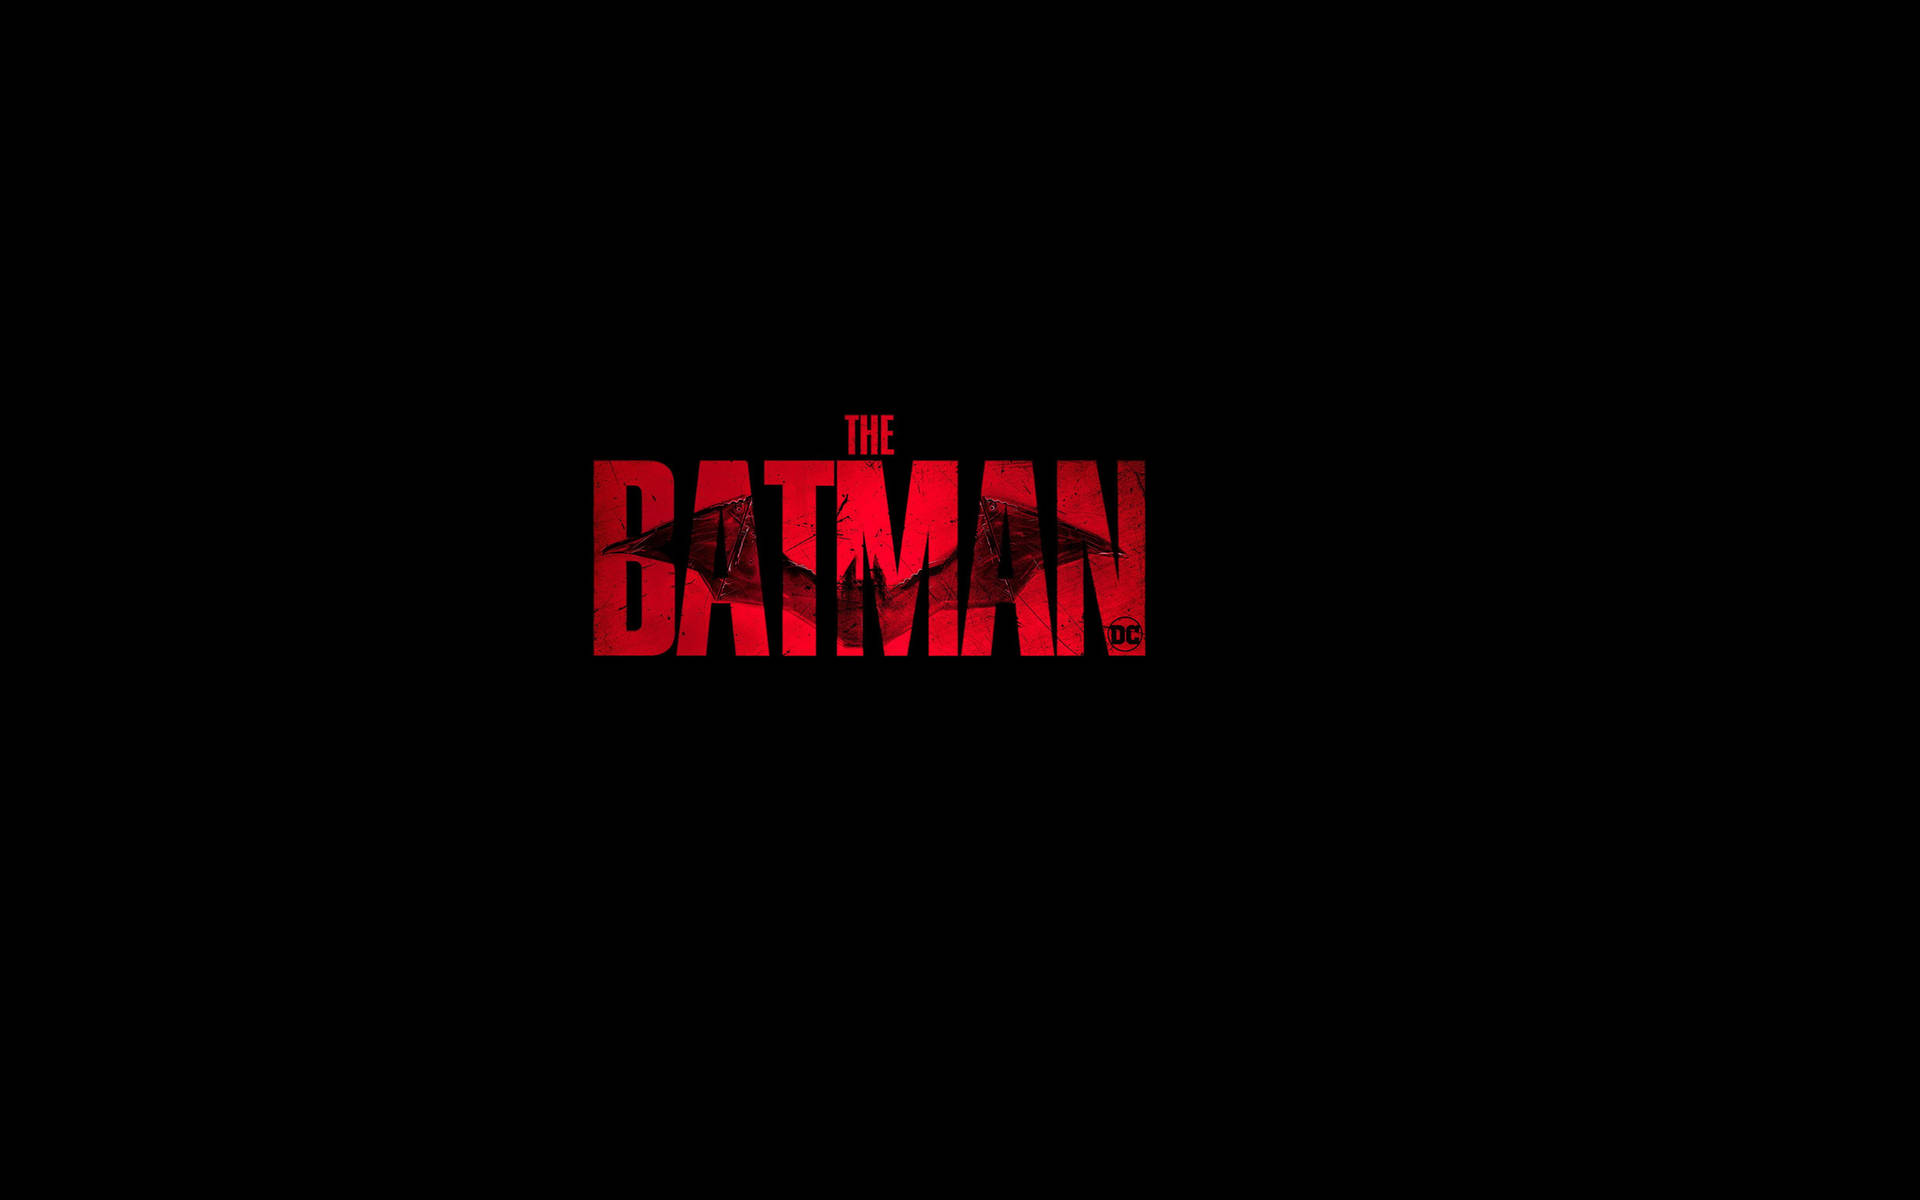 The Batman Phone Word Art Background